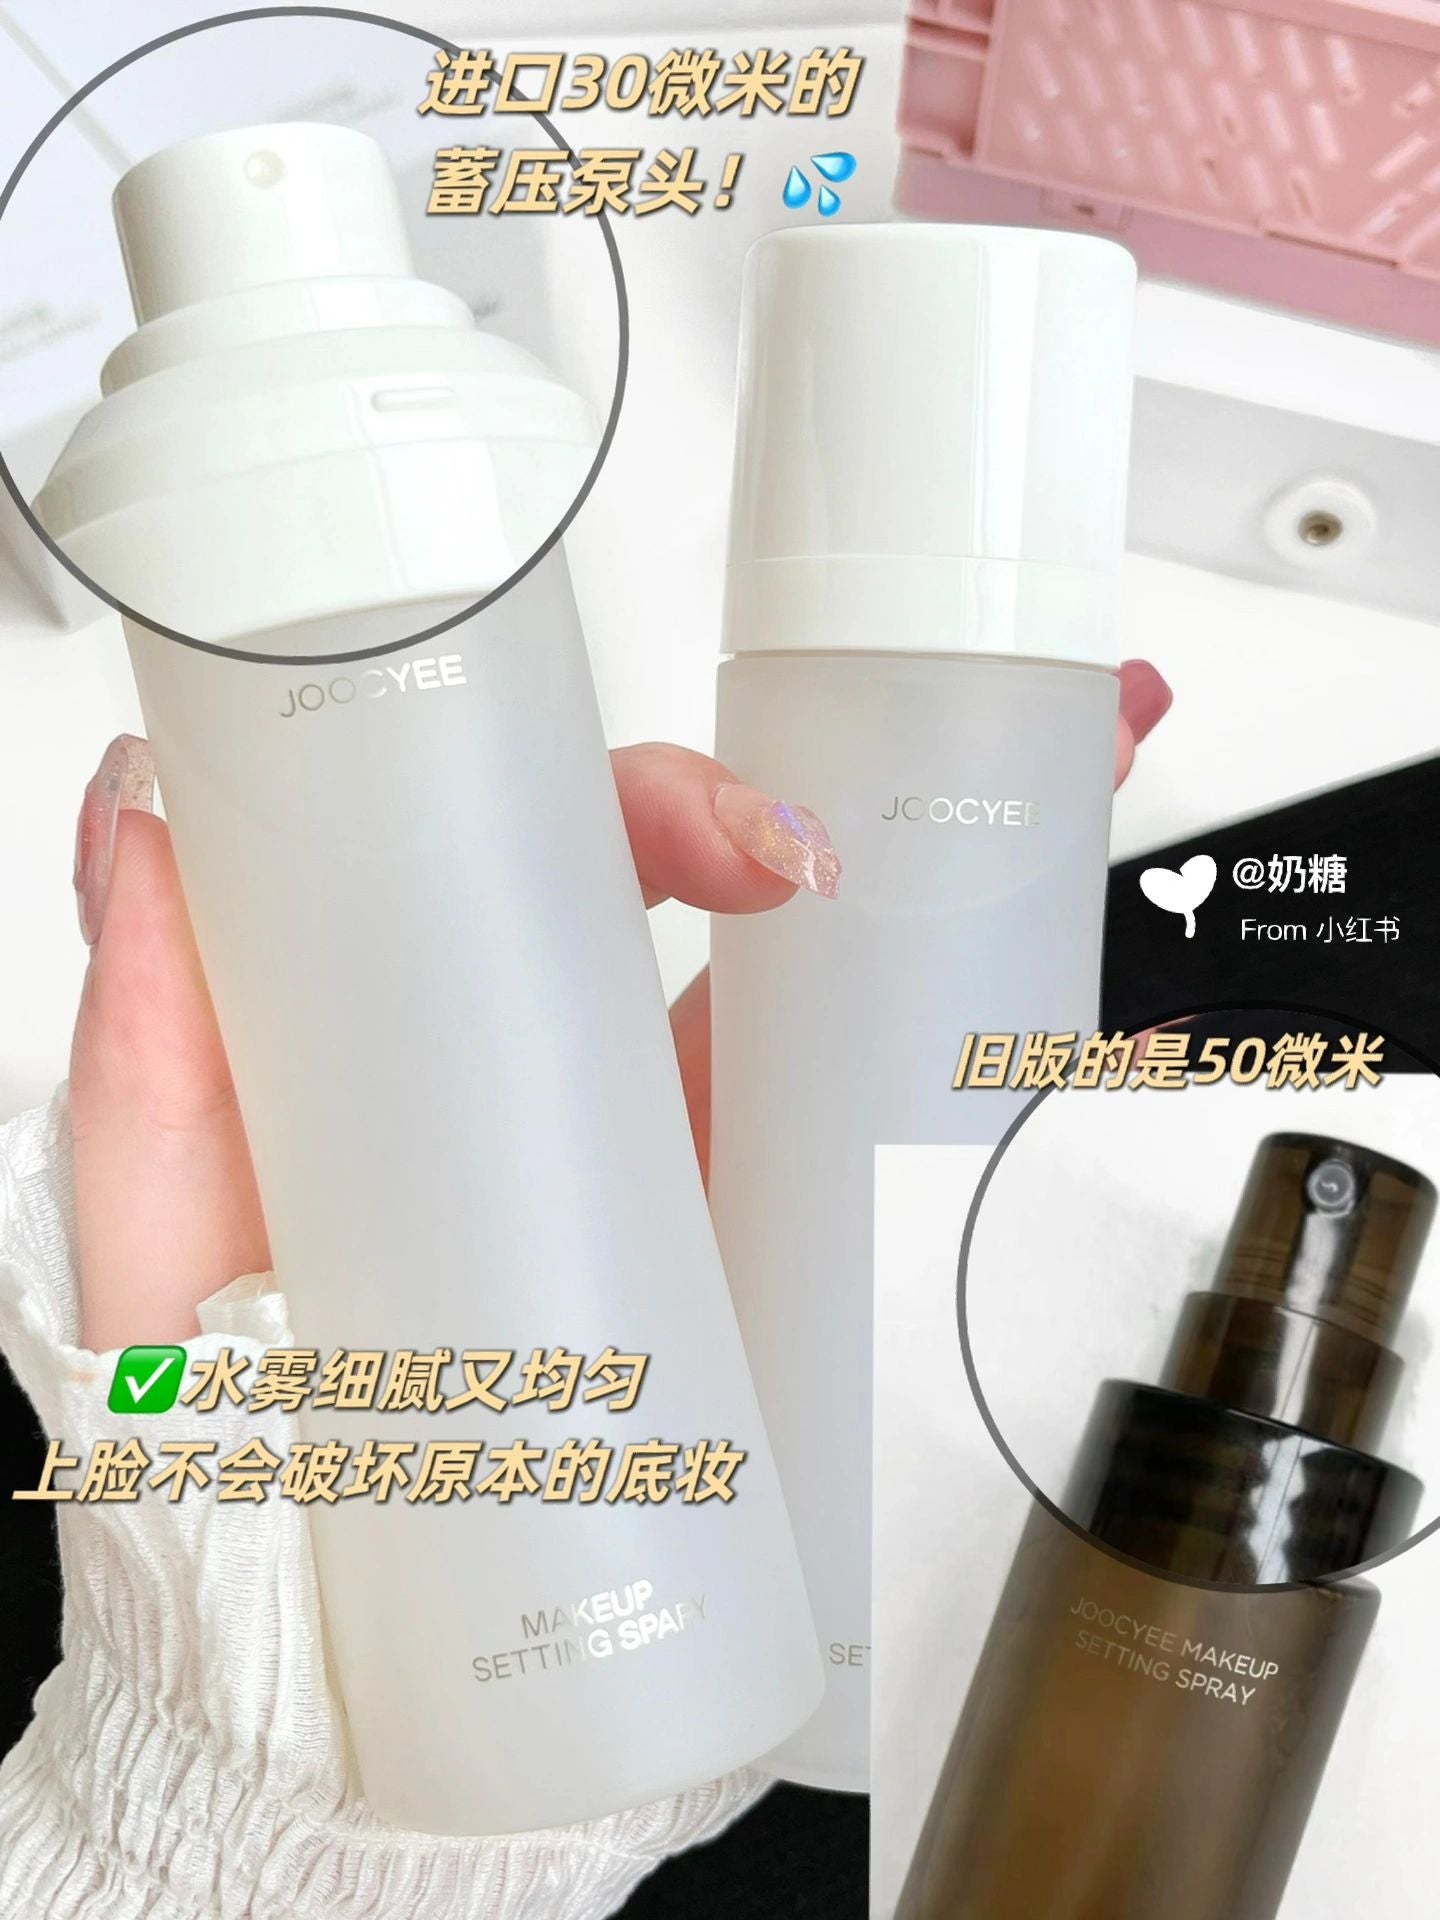 JOOCYEE Makeup Setting Spray 酵色定妆喷雾 30ml/100ml